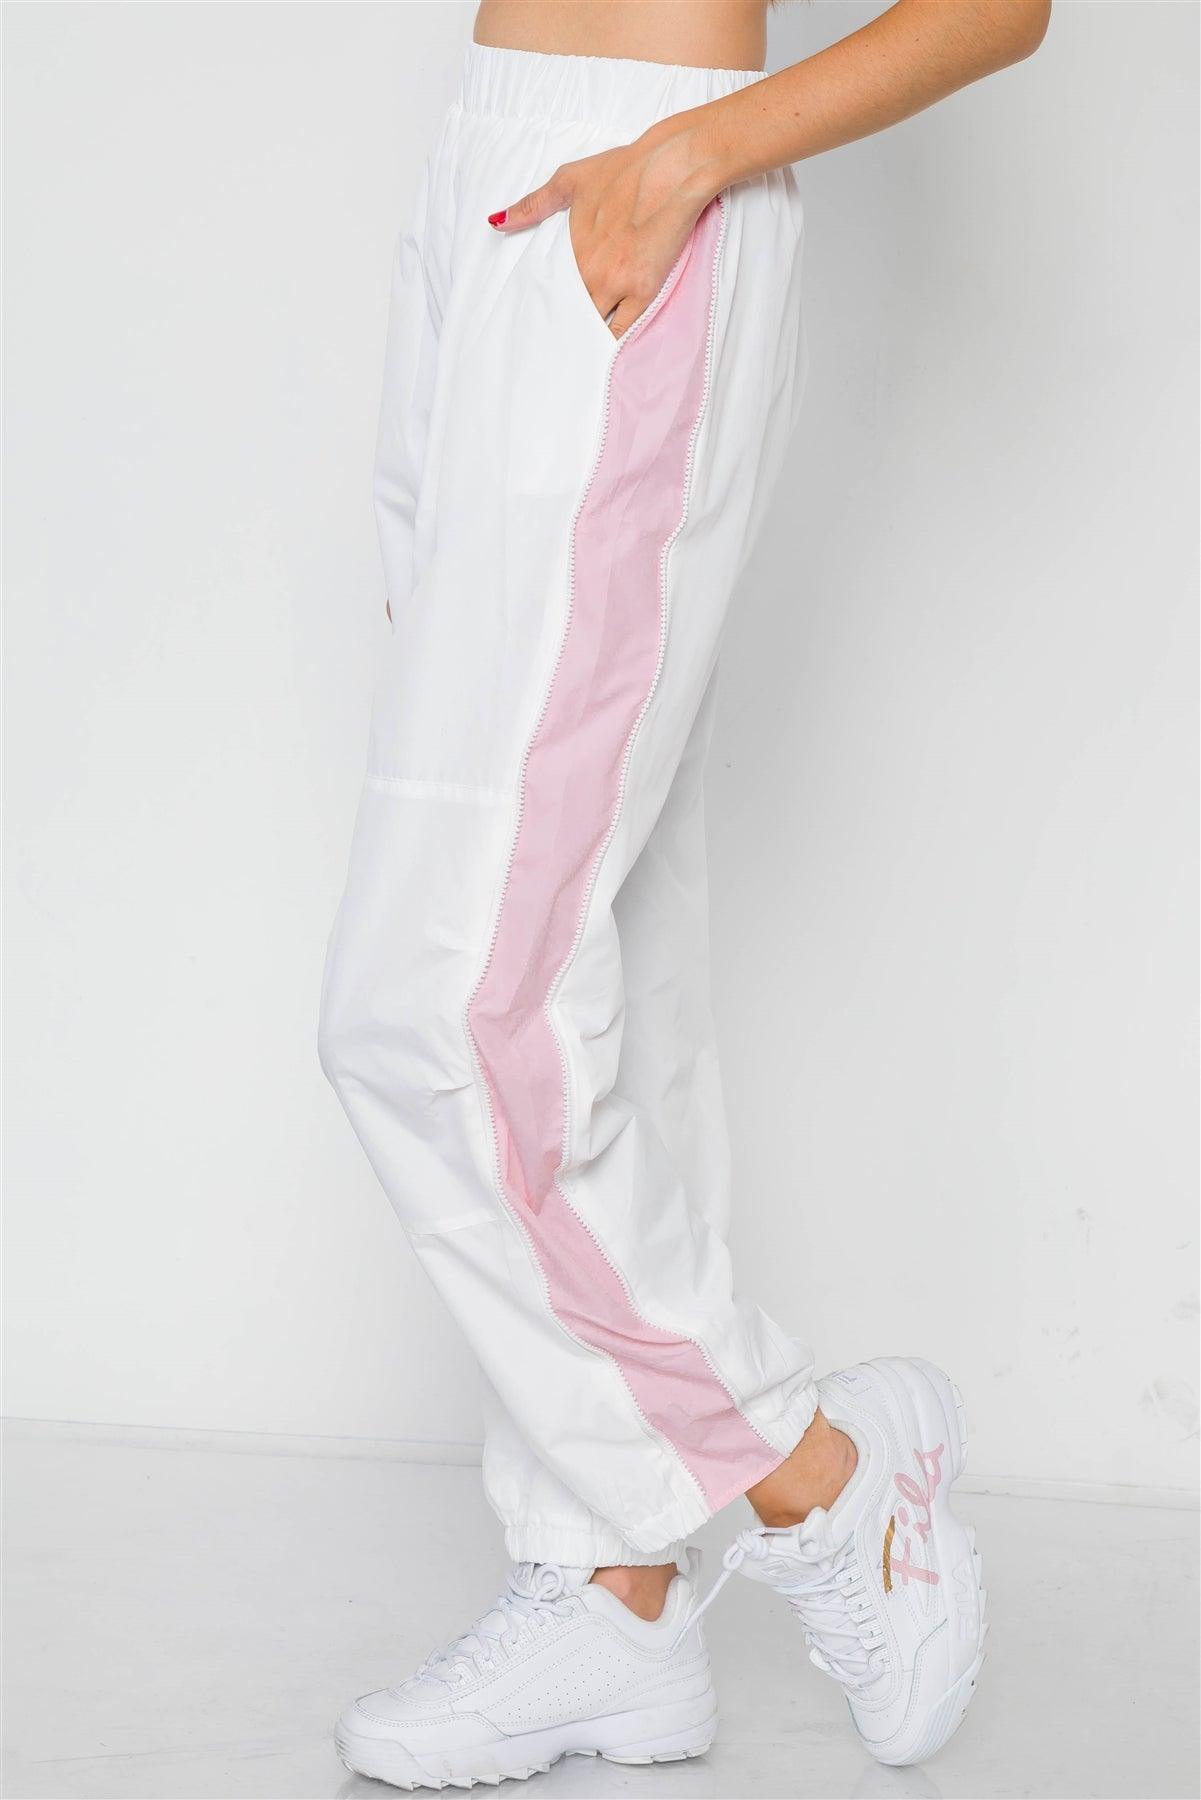 White Pink Colorblock Windbreaker Jacket Pant Set /2-2-2